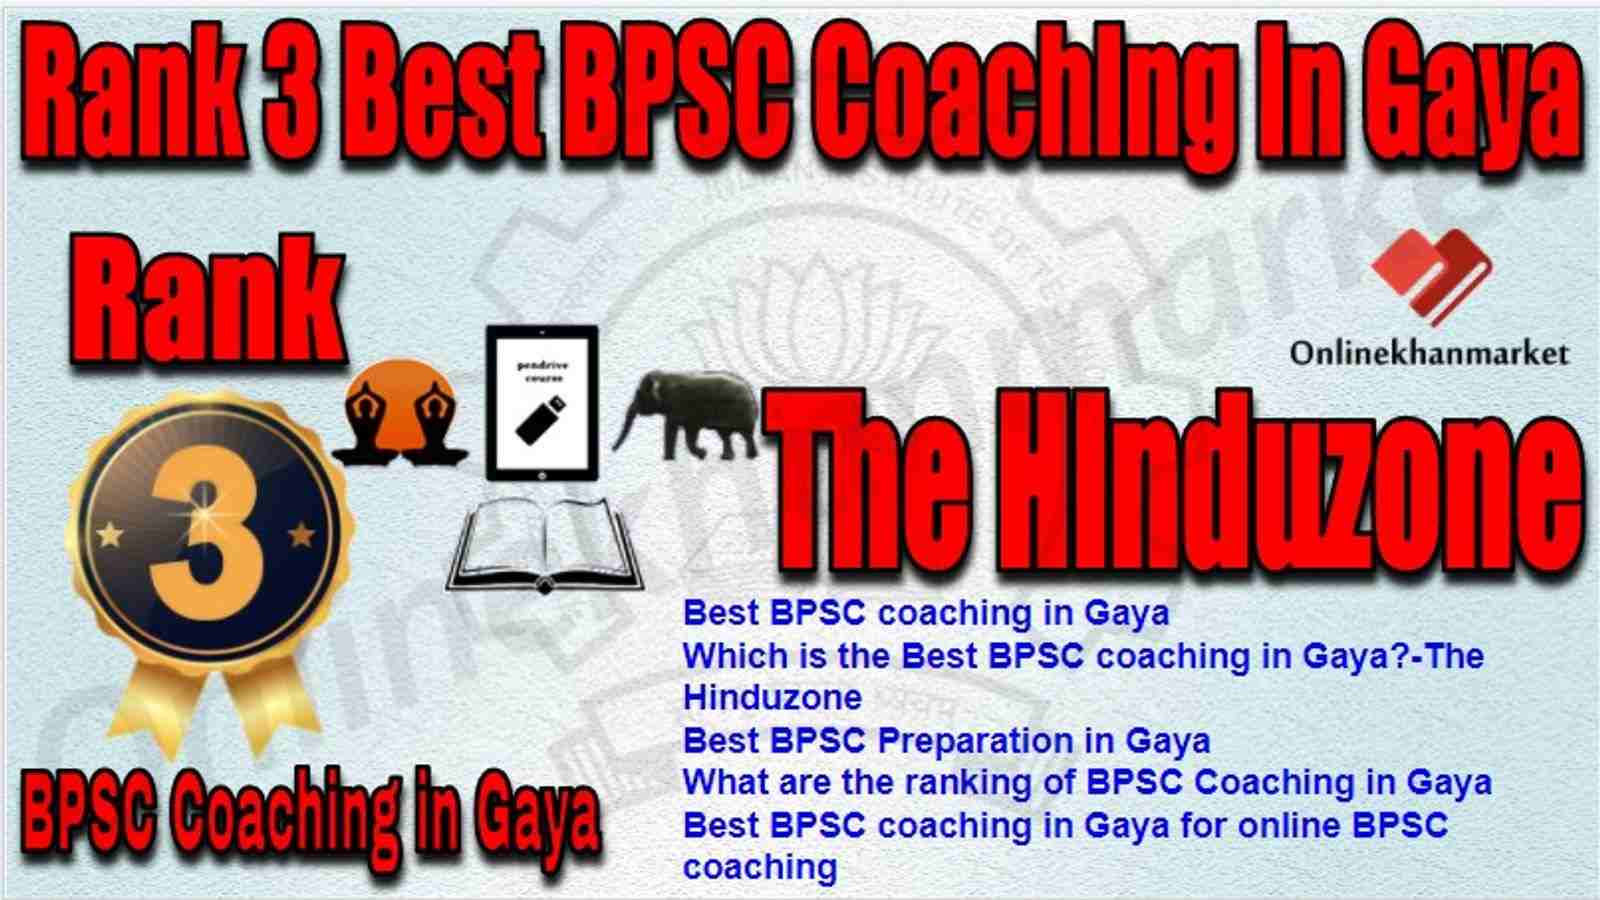 Rank 3 Best BPSC Coaching in gaya